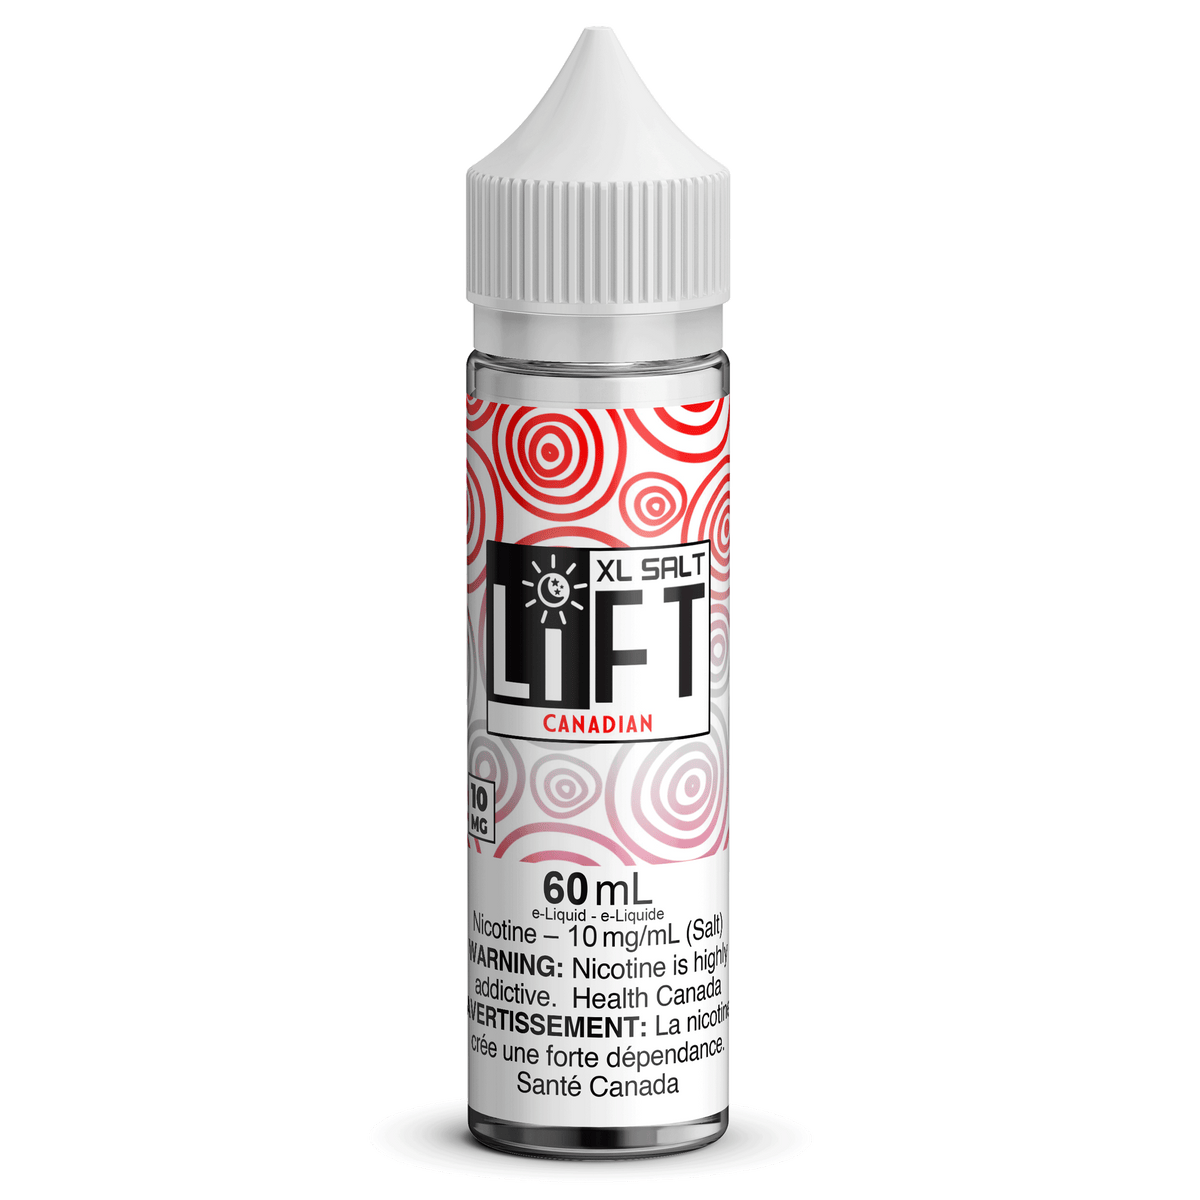 LIFT XL SALT - Canadian Tobacco available on Canada online vape shop